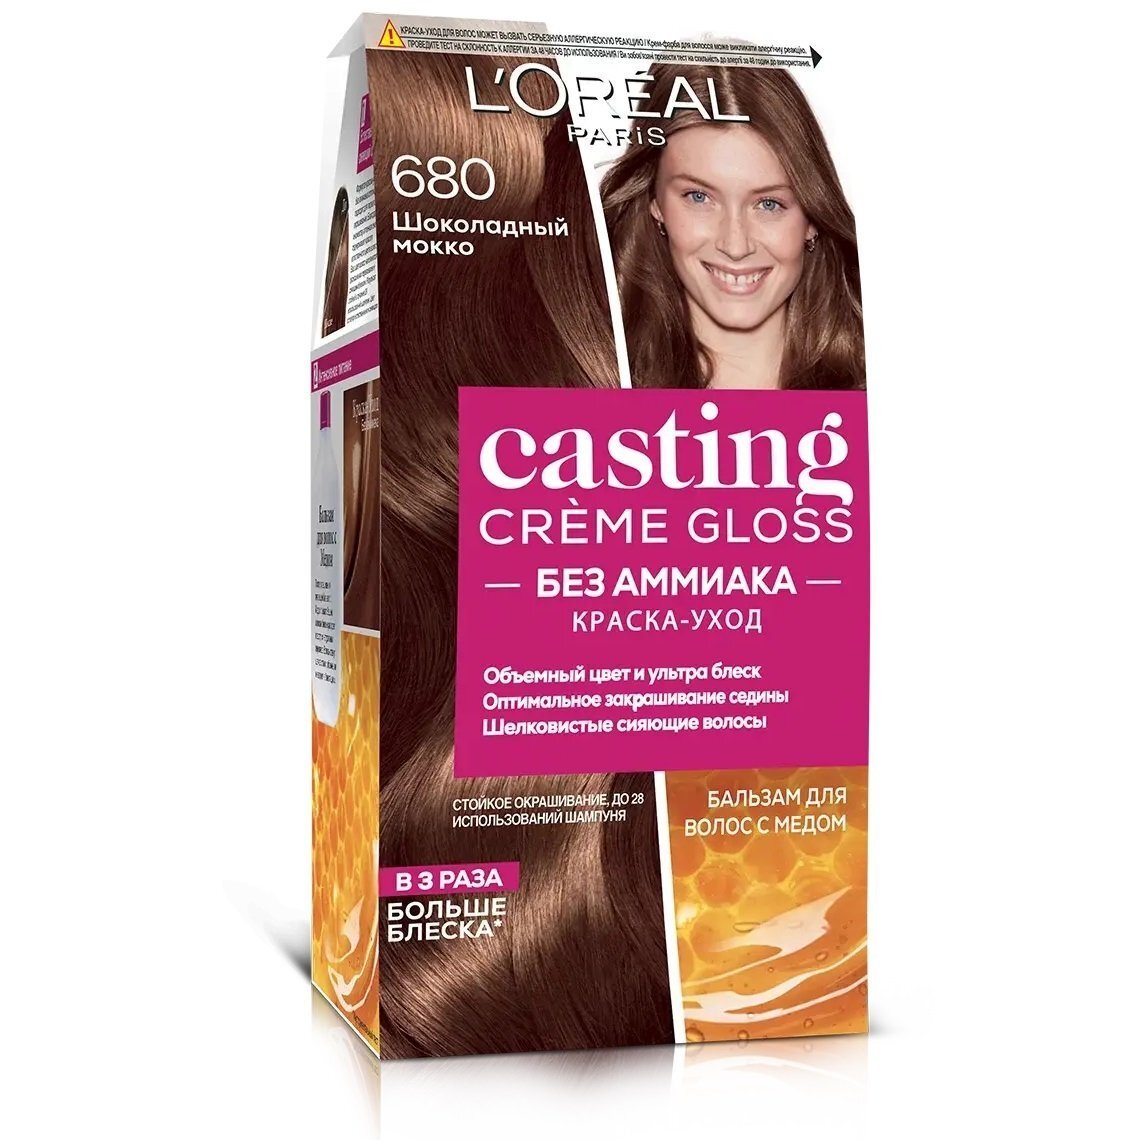 Крем-краска для волос без аммиака L'Oreal Paris Casting Creme Gloss 680 Шоколадный мокко фото 1